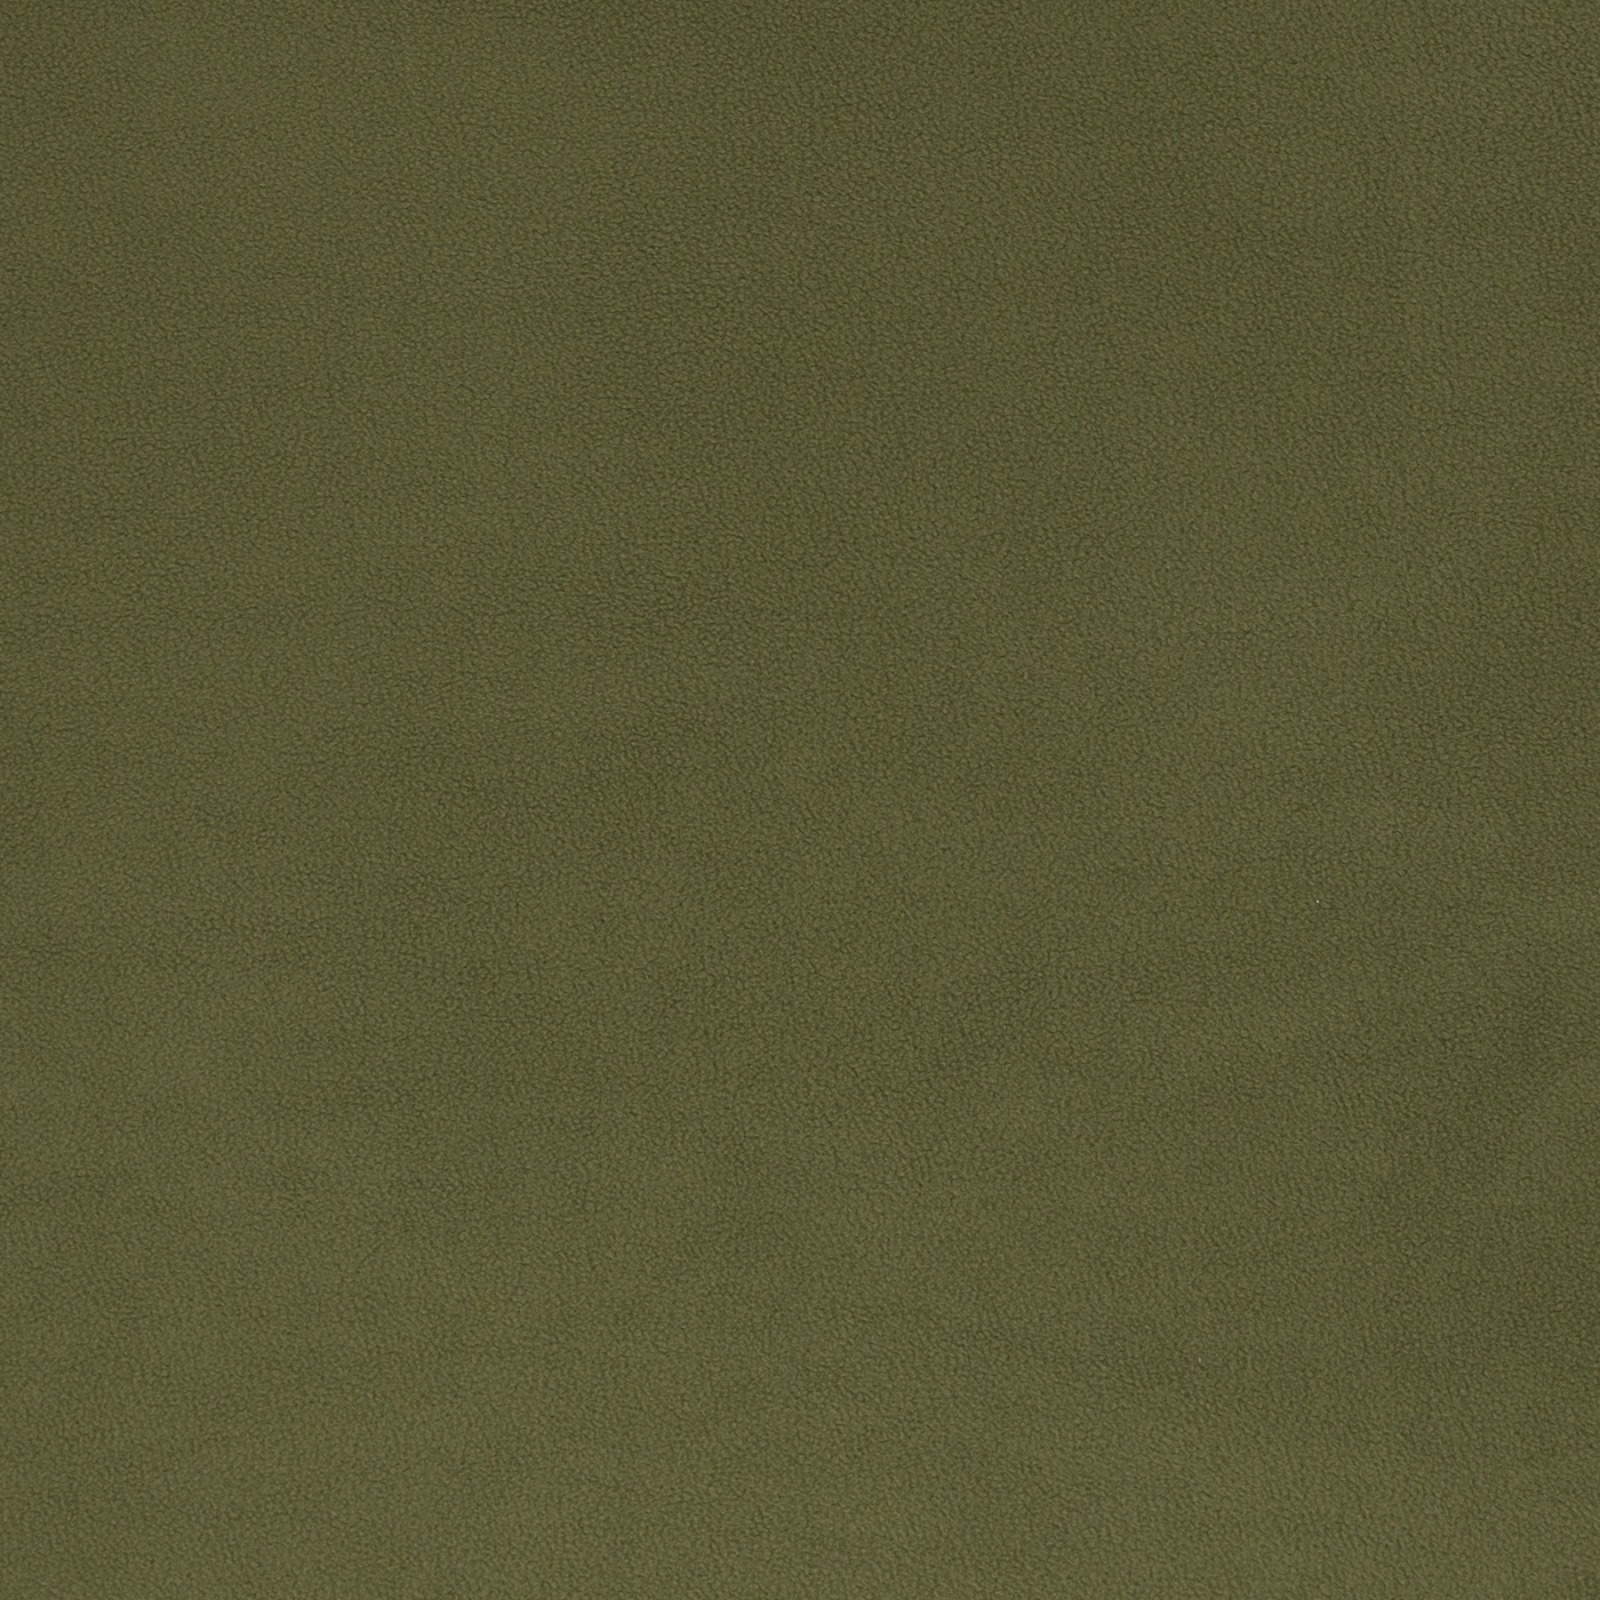 Doubleface Fleece Tamme 1450 Eur/m olivgrün khaki 4